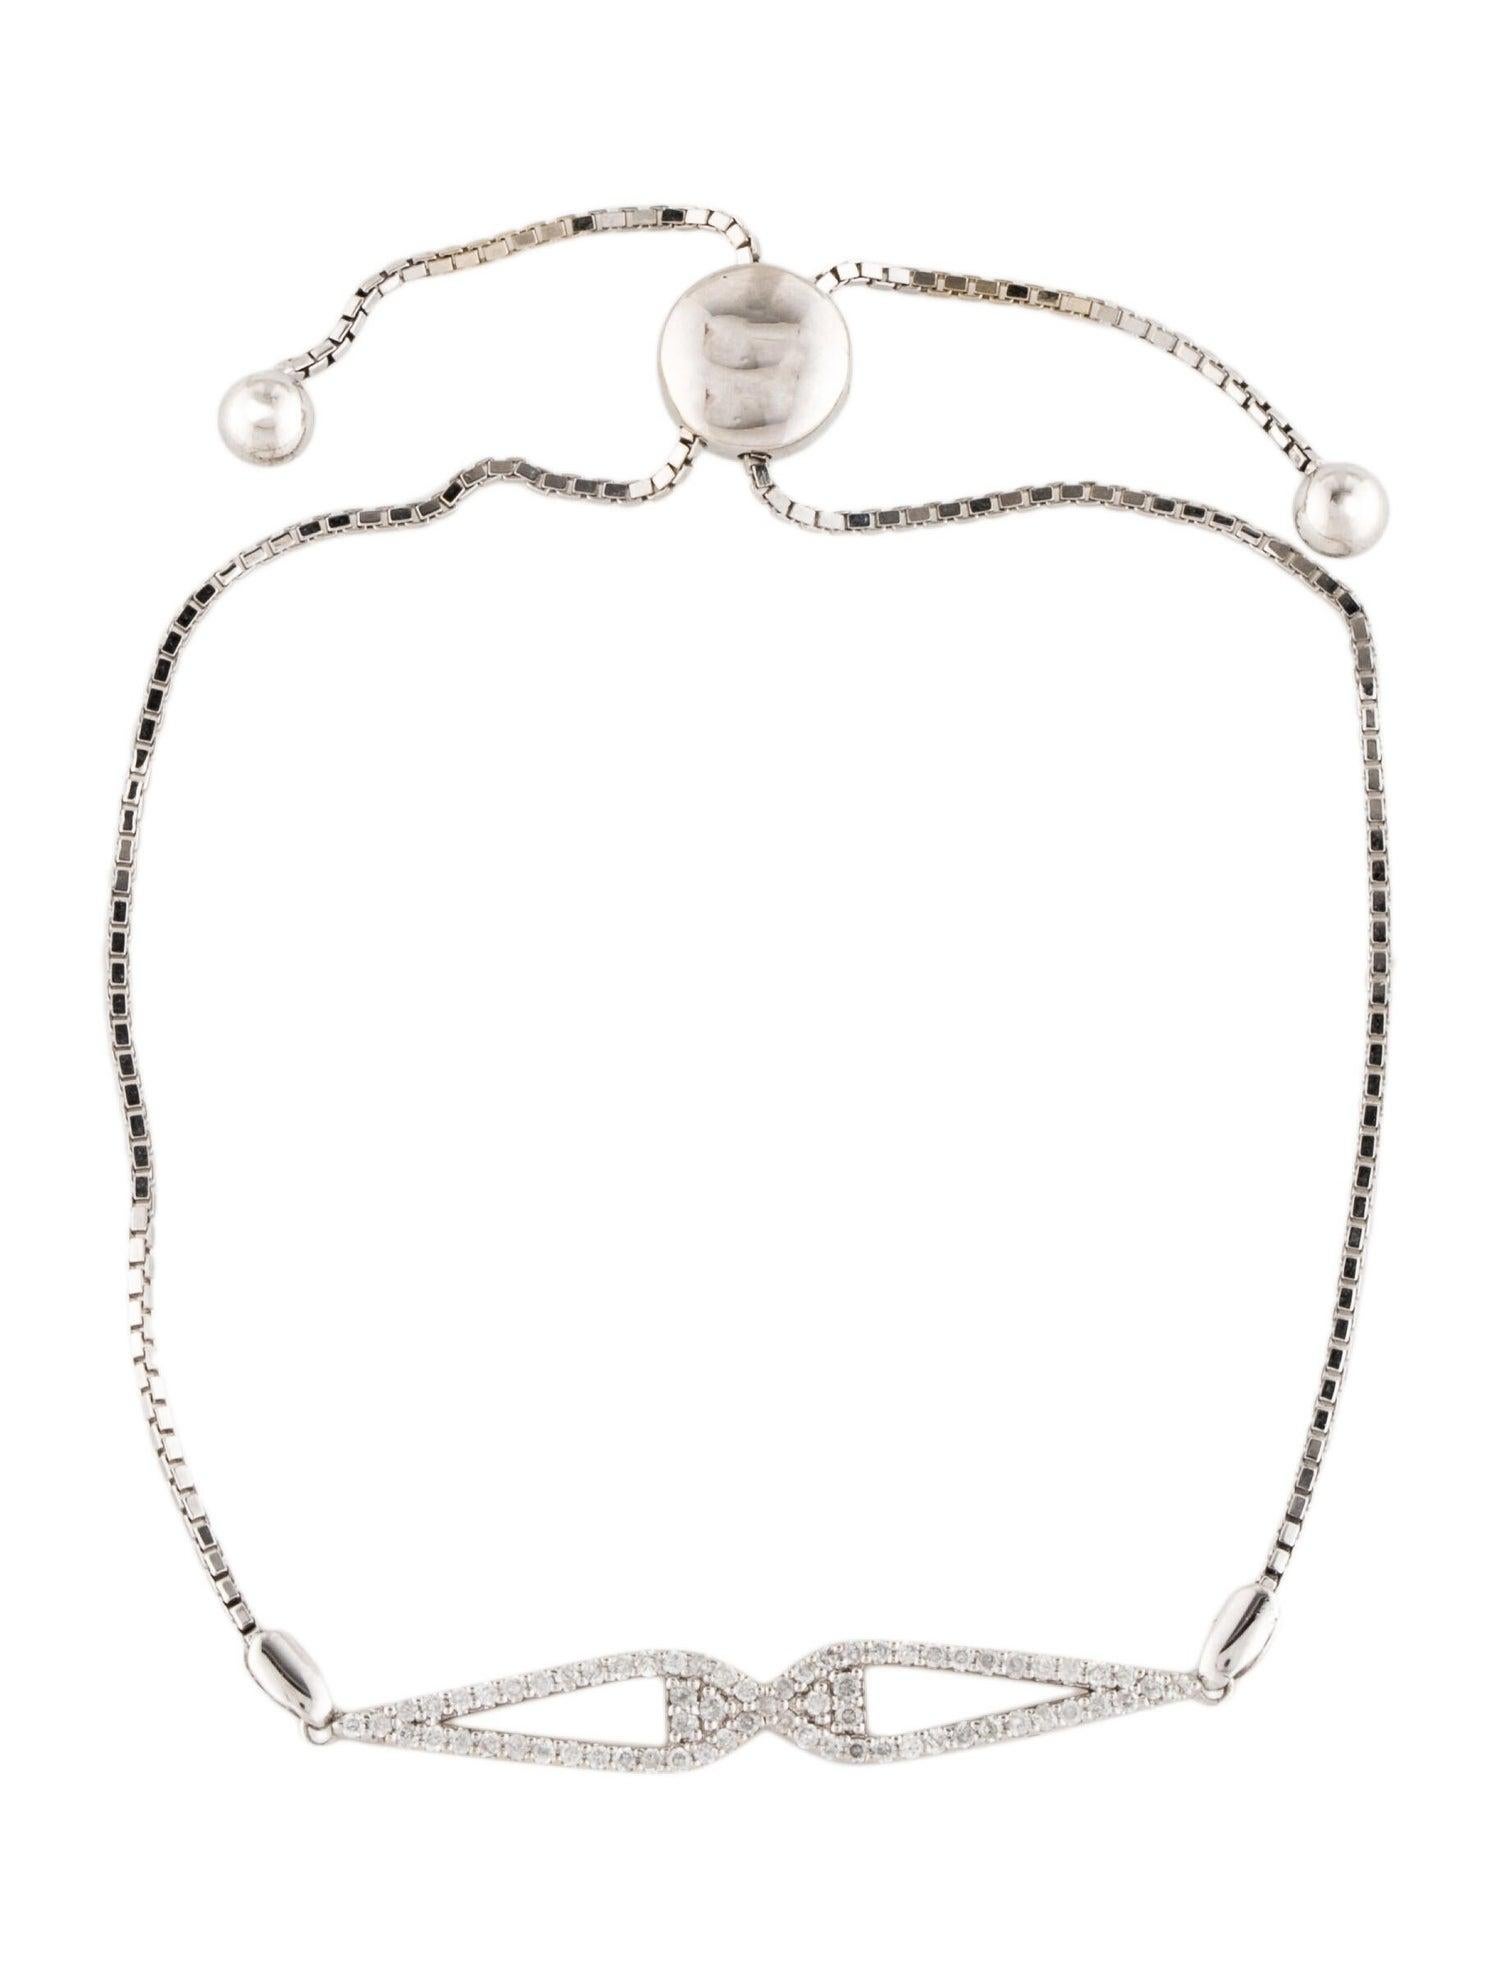 Brilliant Cut Luxurious 14K Diamond Bangle Bracelet - Sparkling Elegance, Timeless Glamour For Sale